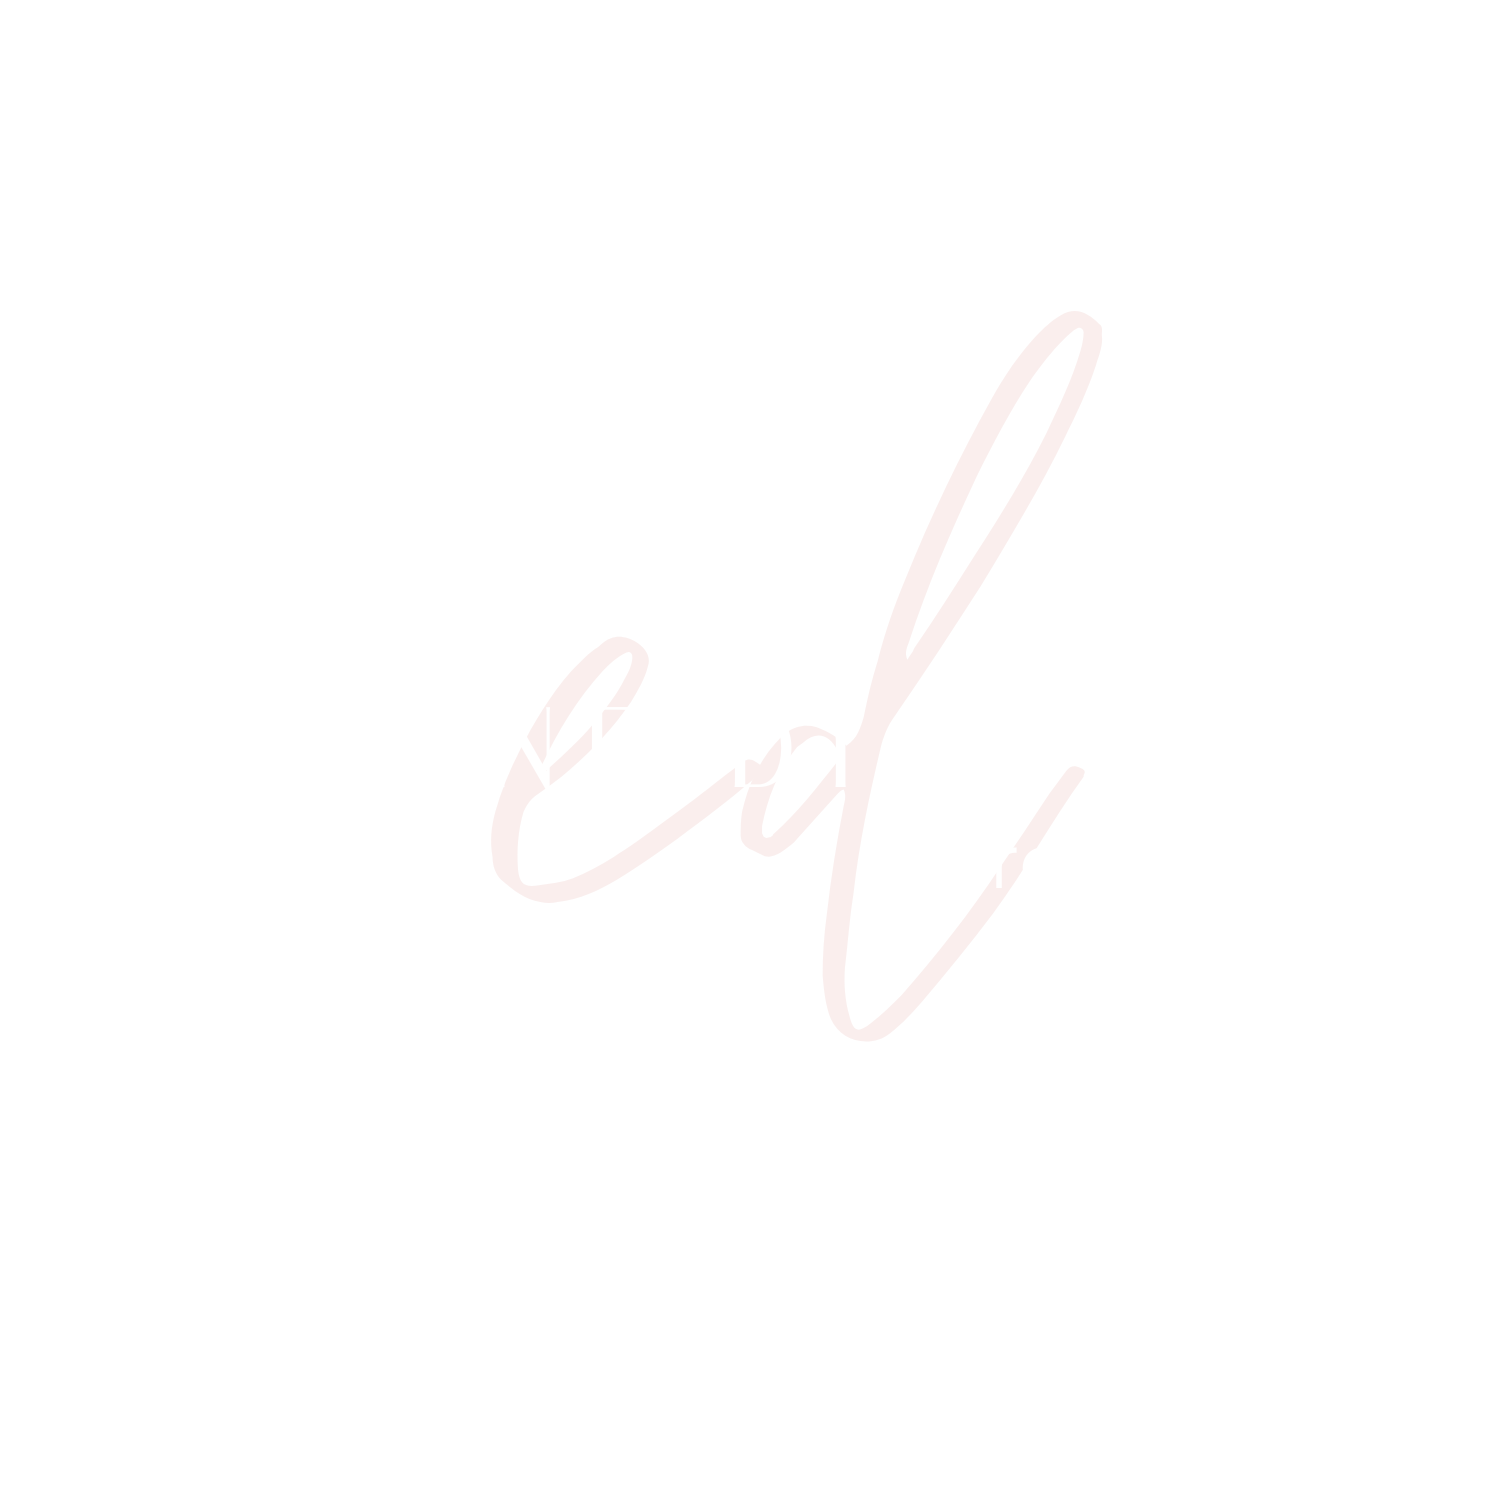 Elaine DiCocco Real Estate